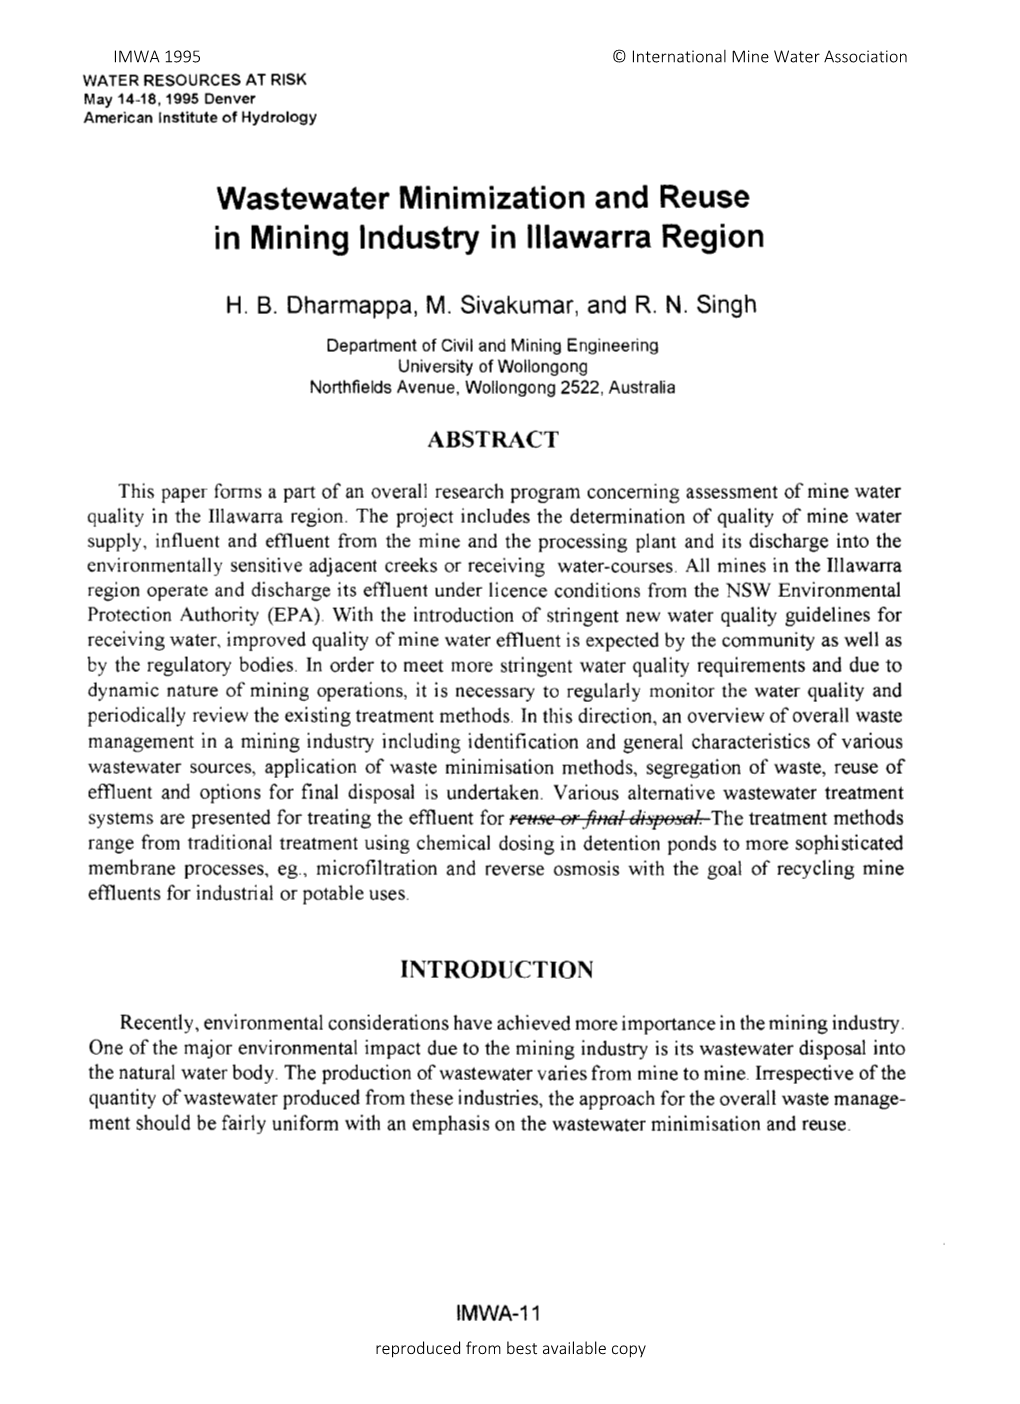 Wastewater Minimization and Reuse in Mining Industry in Illawarra Region